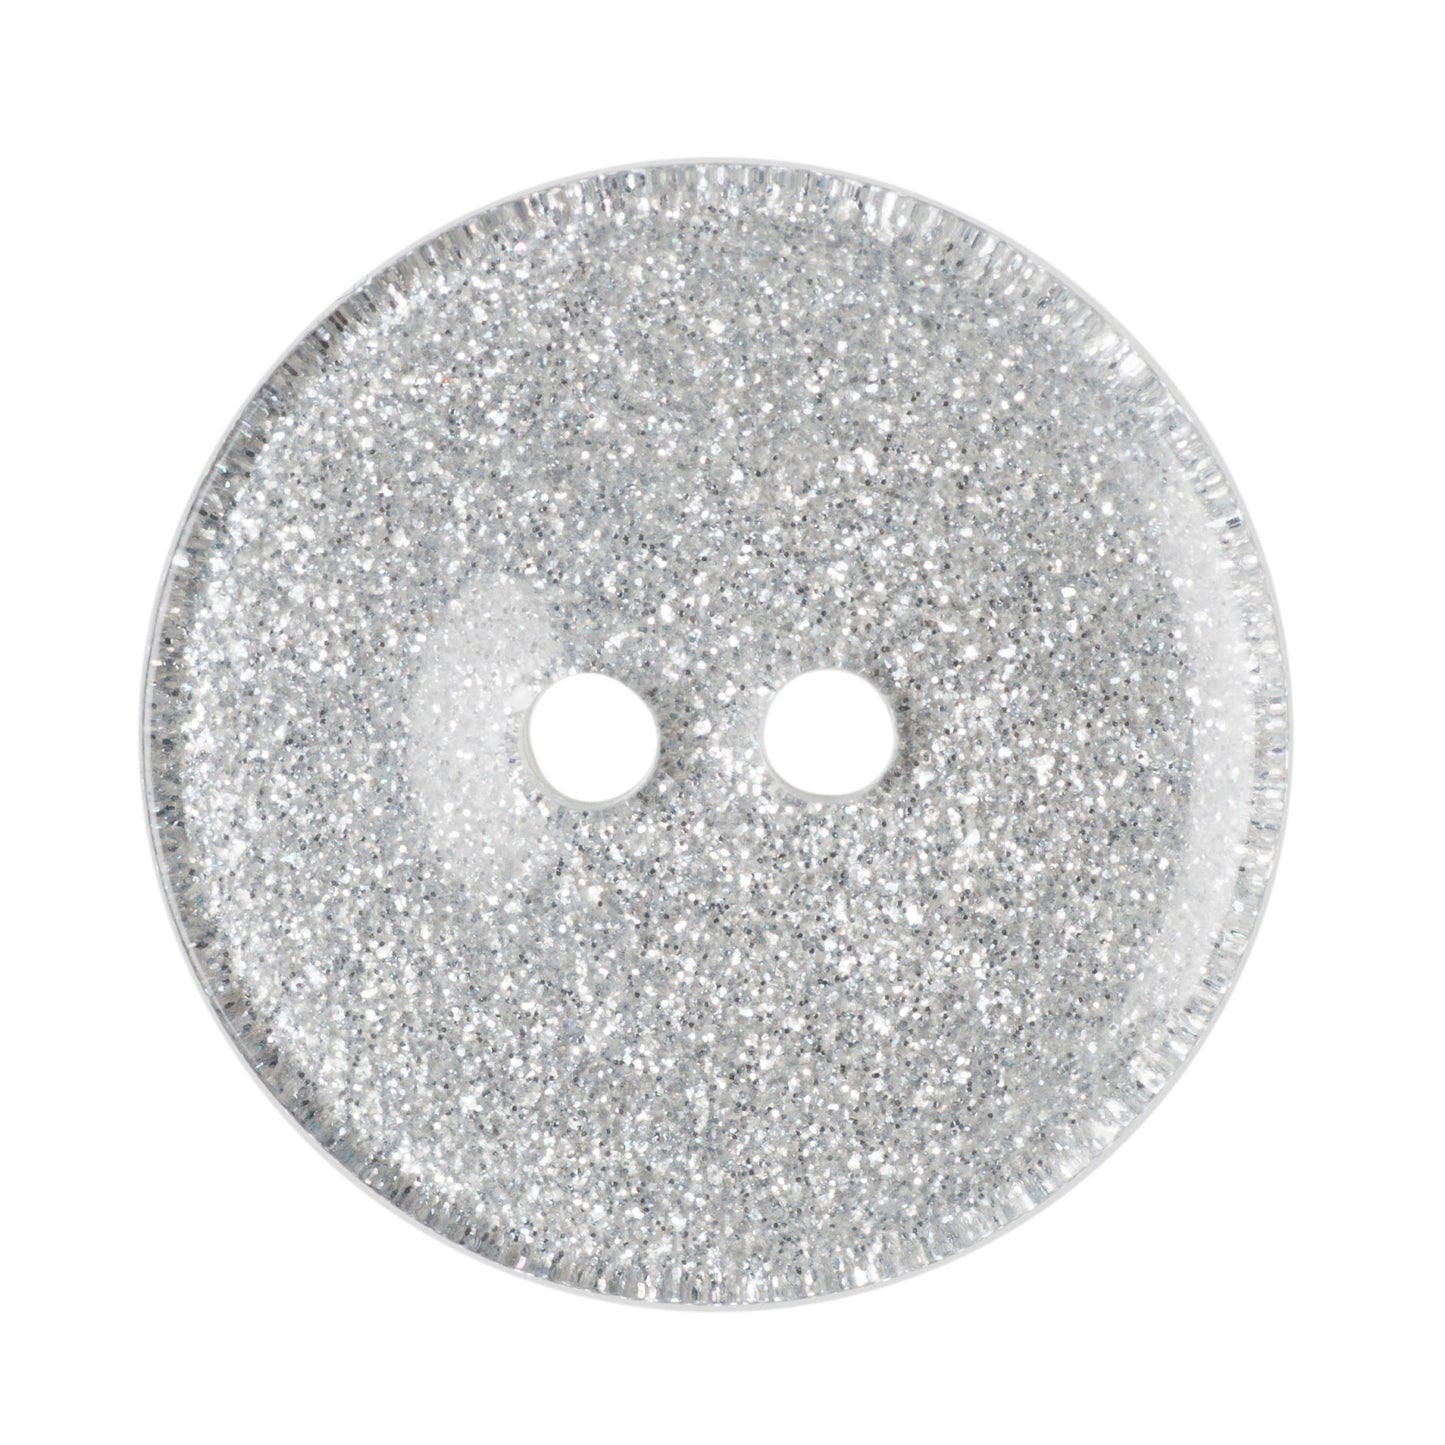 2 Hole Round Glitter Button - 20mm - Silver [LD12.1]